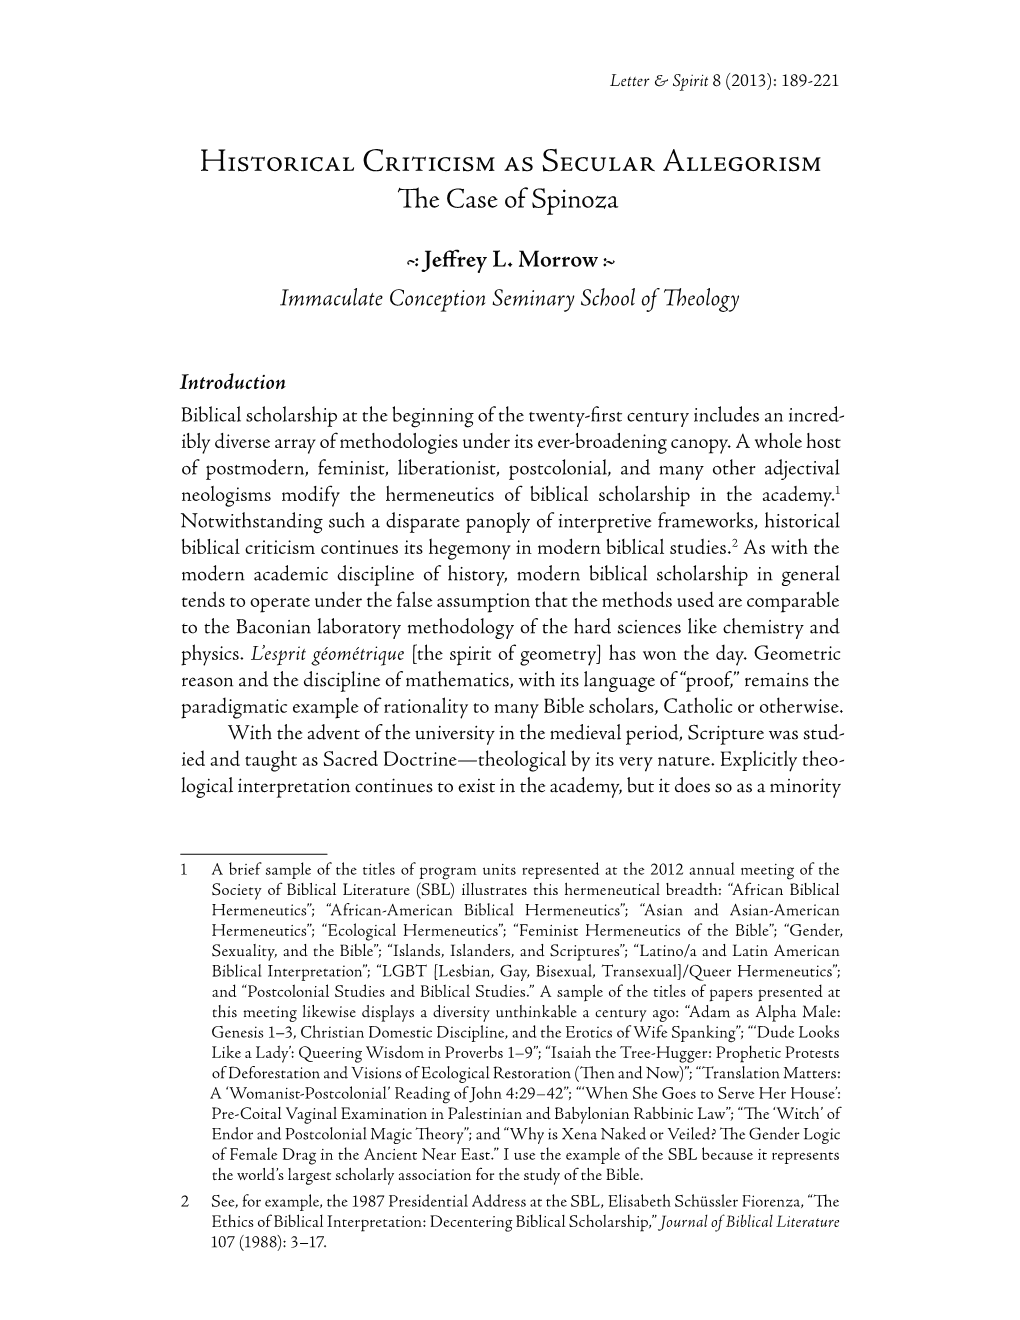 Historical Criticism As Secular Allegorism 191